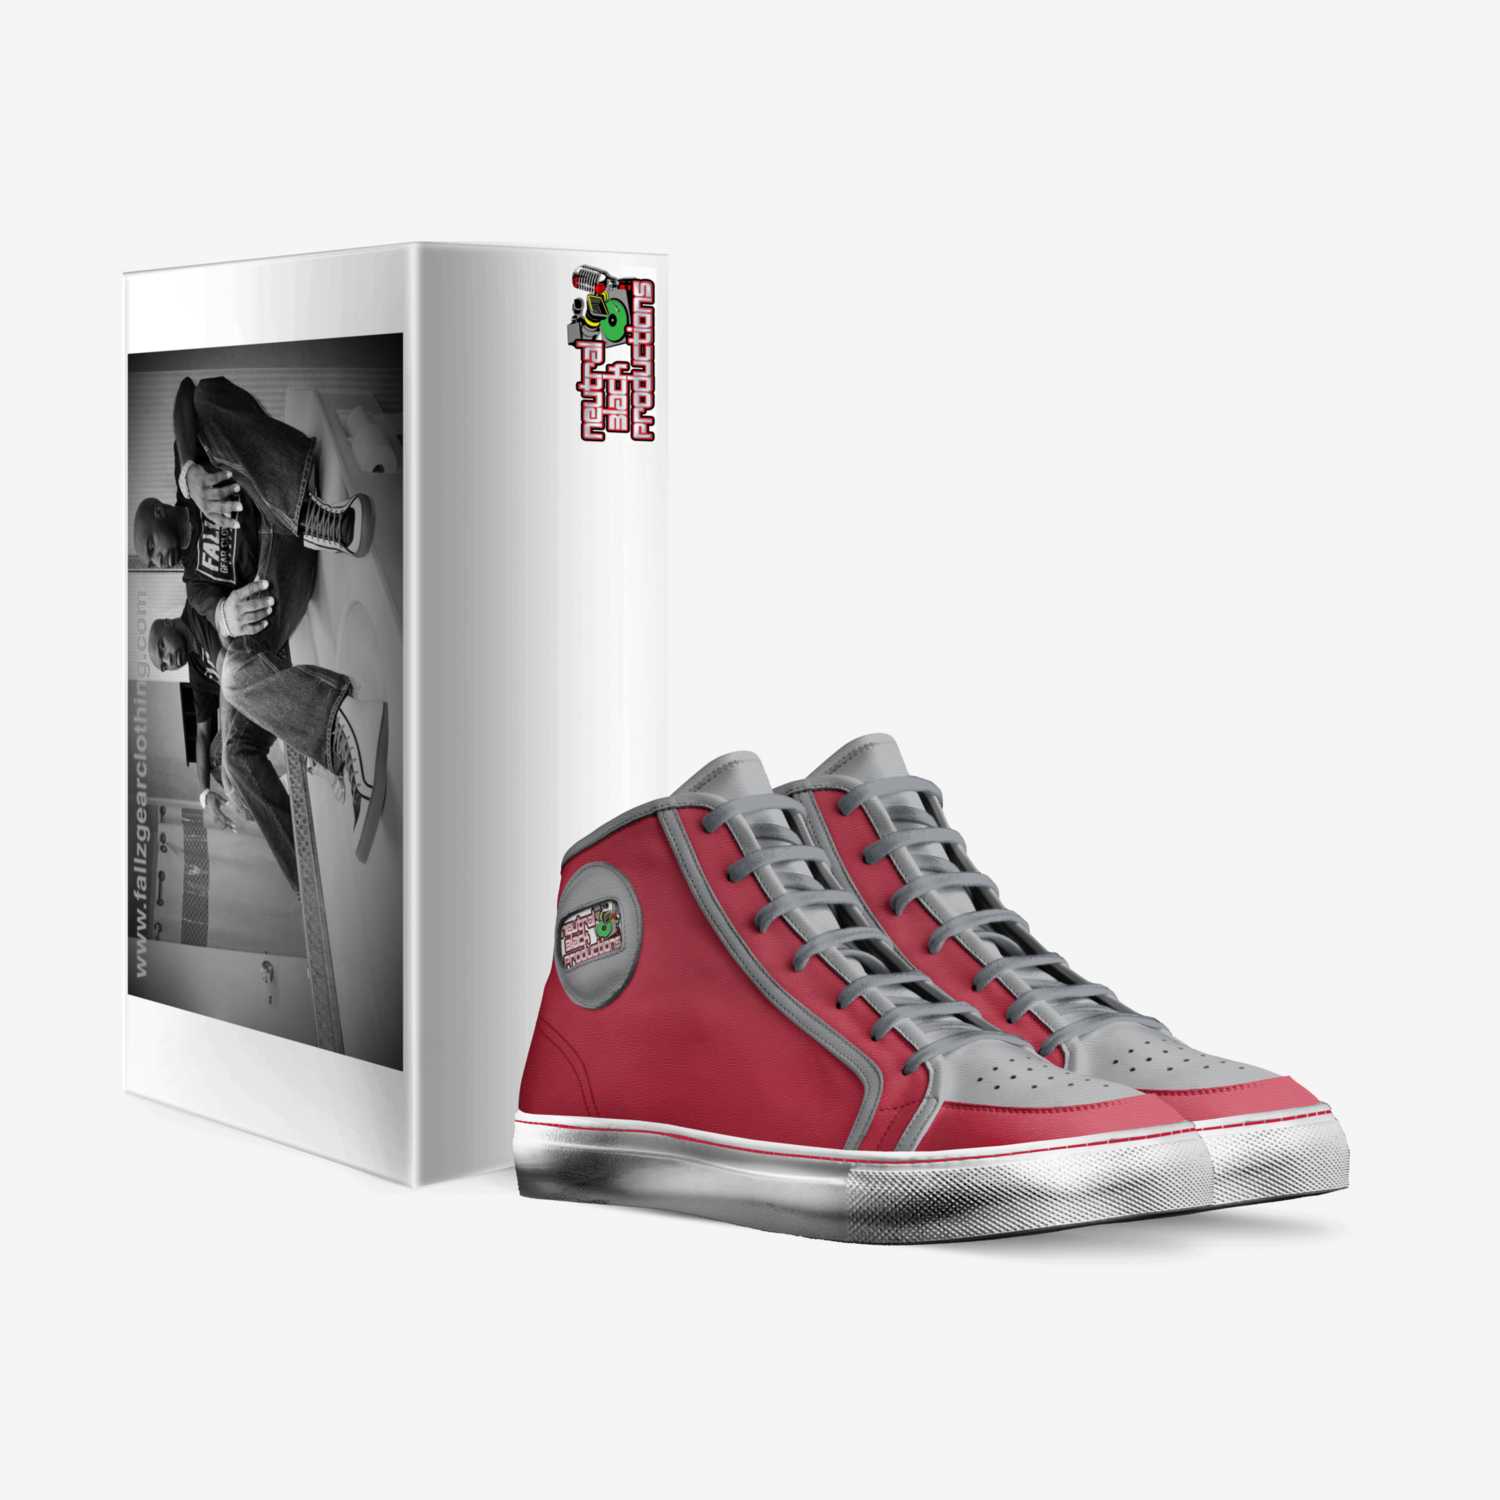 Fallz Gear Neutral custom made in Italy shoes by Fallz Gear | Box view